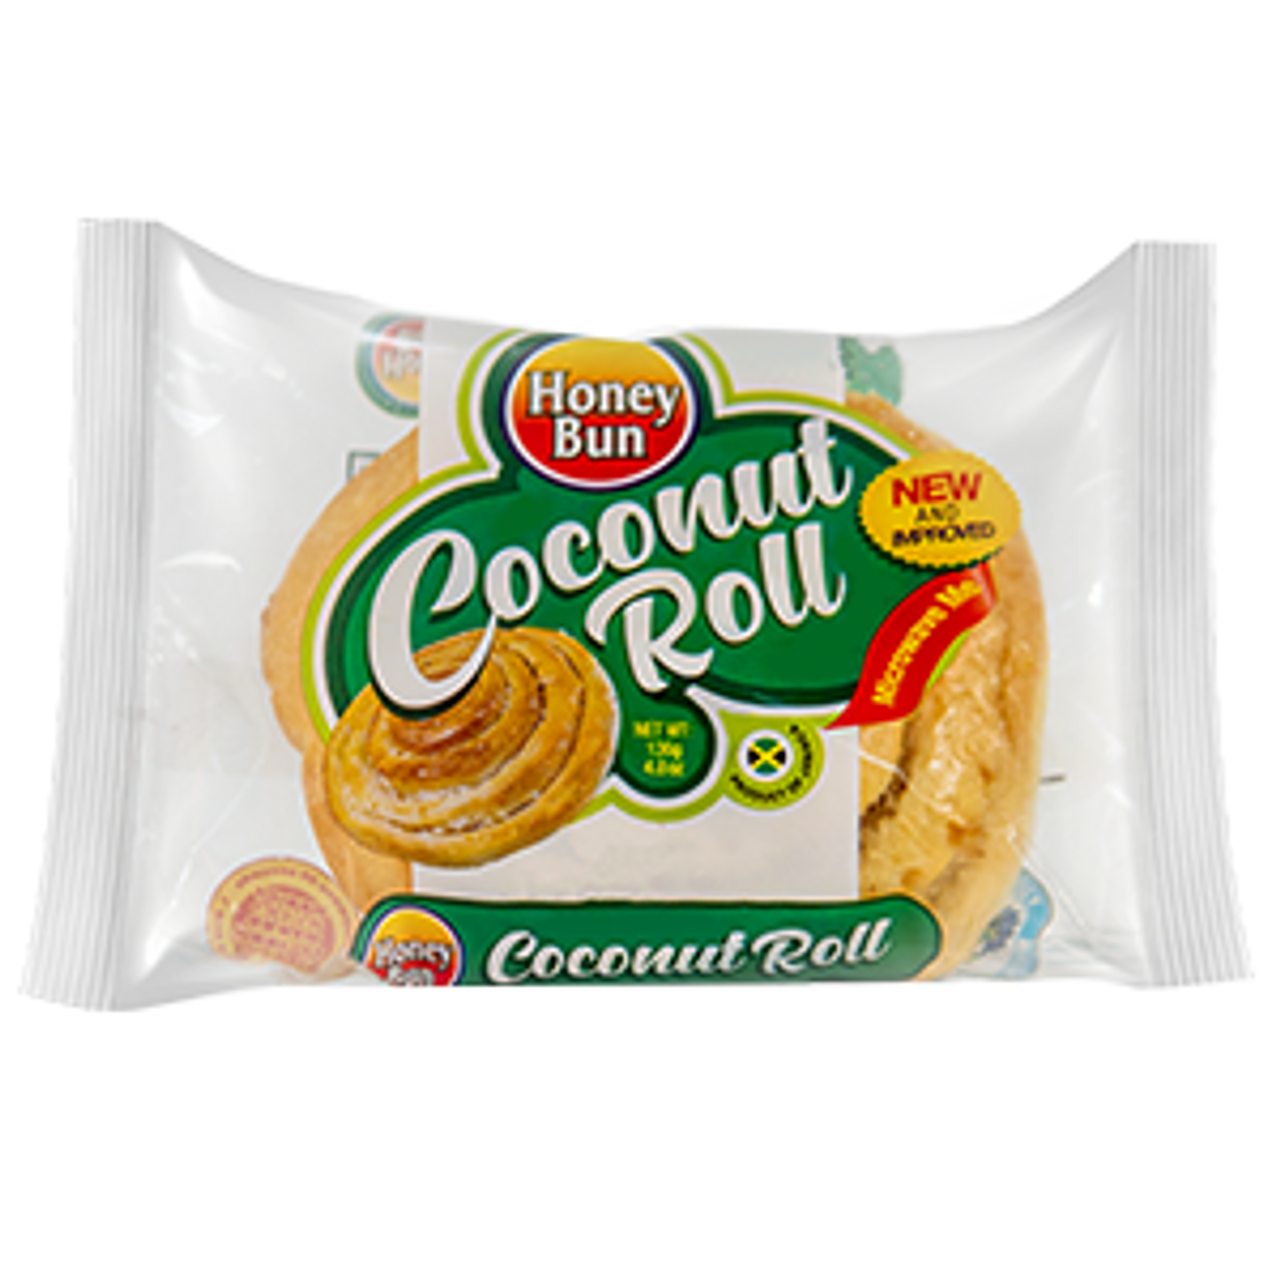 Honey bun coconut roll